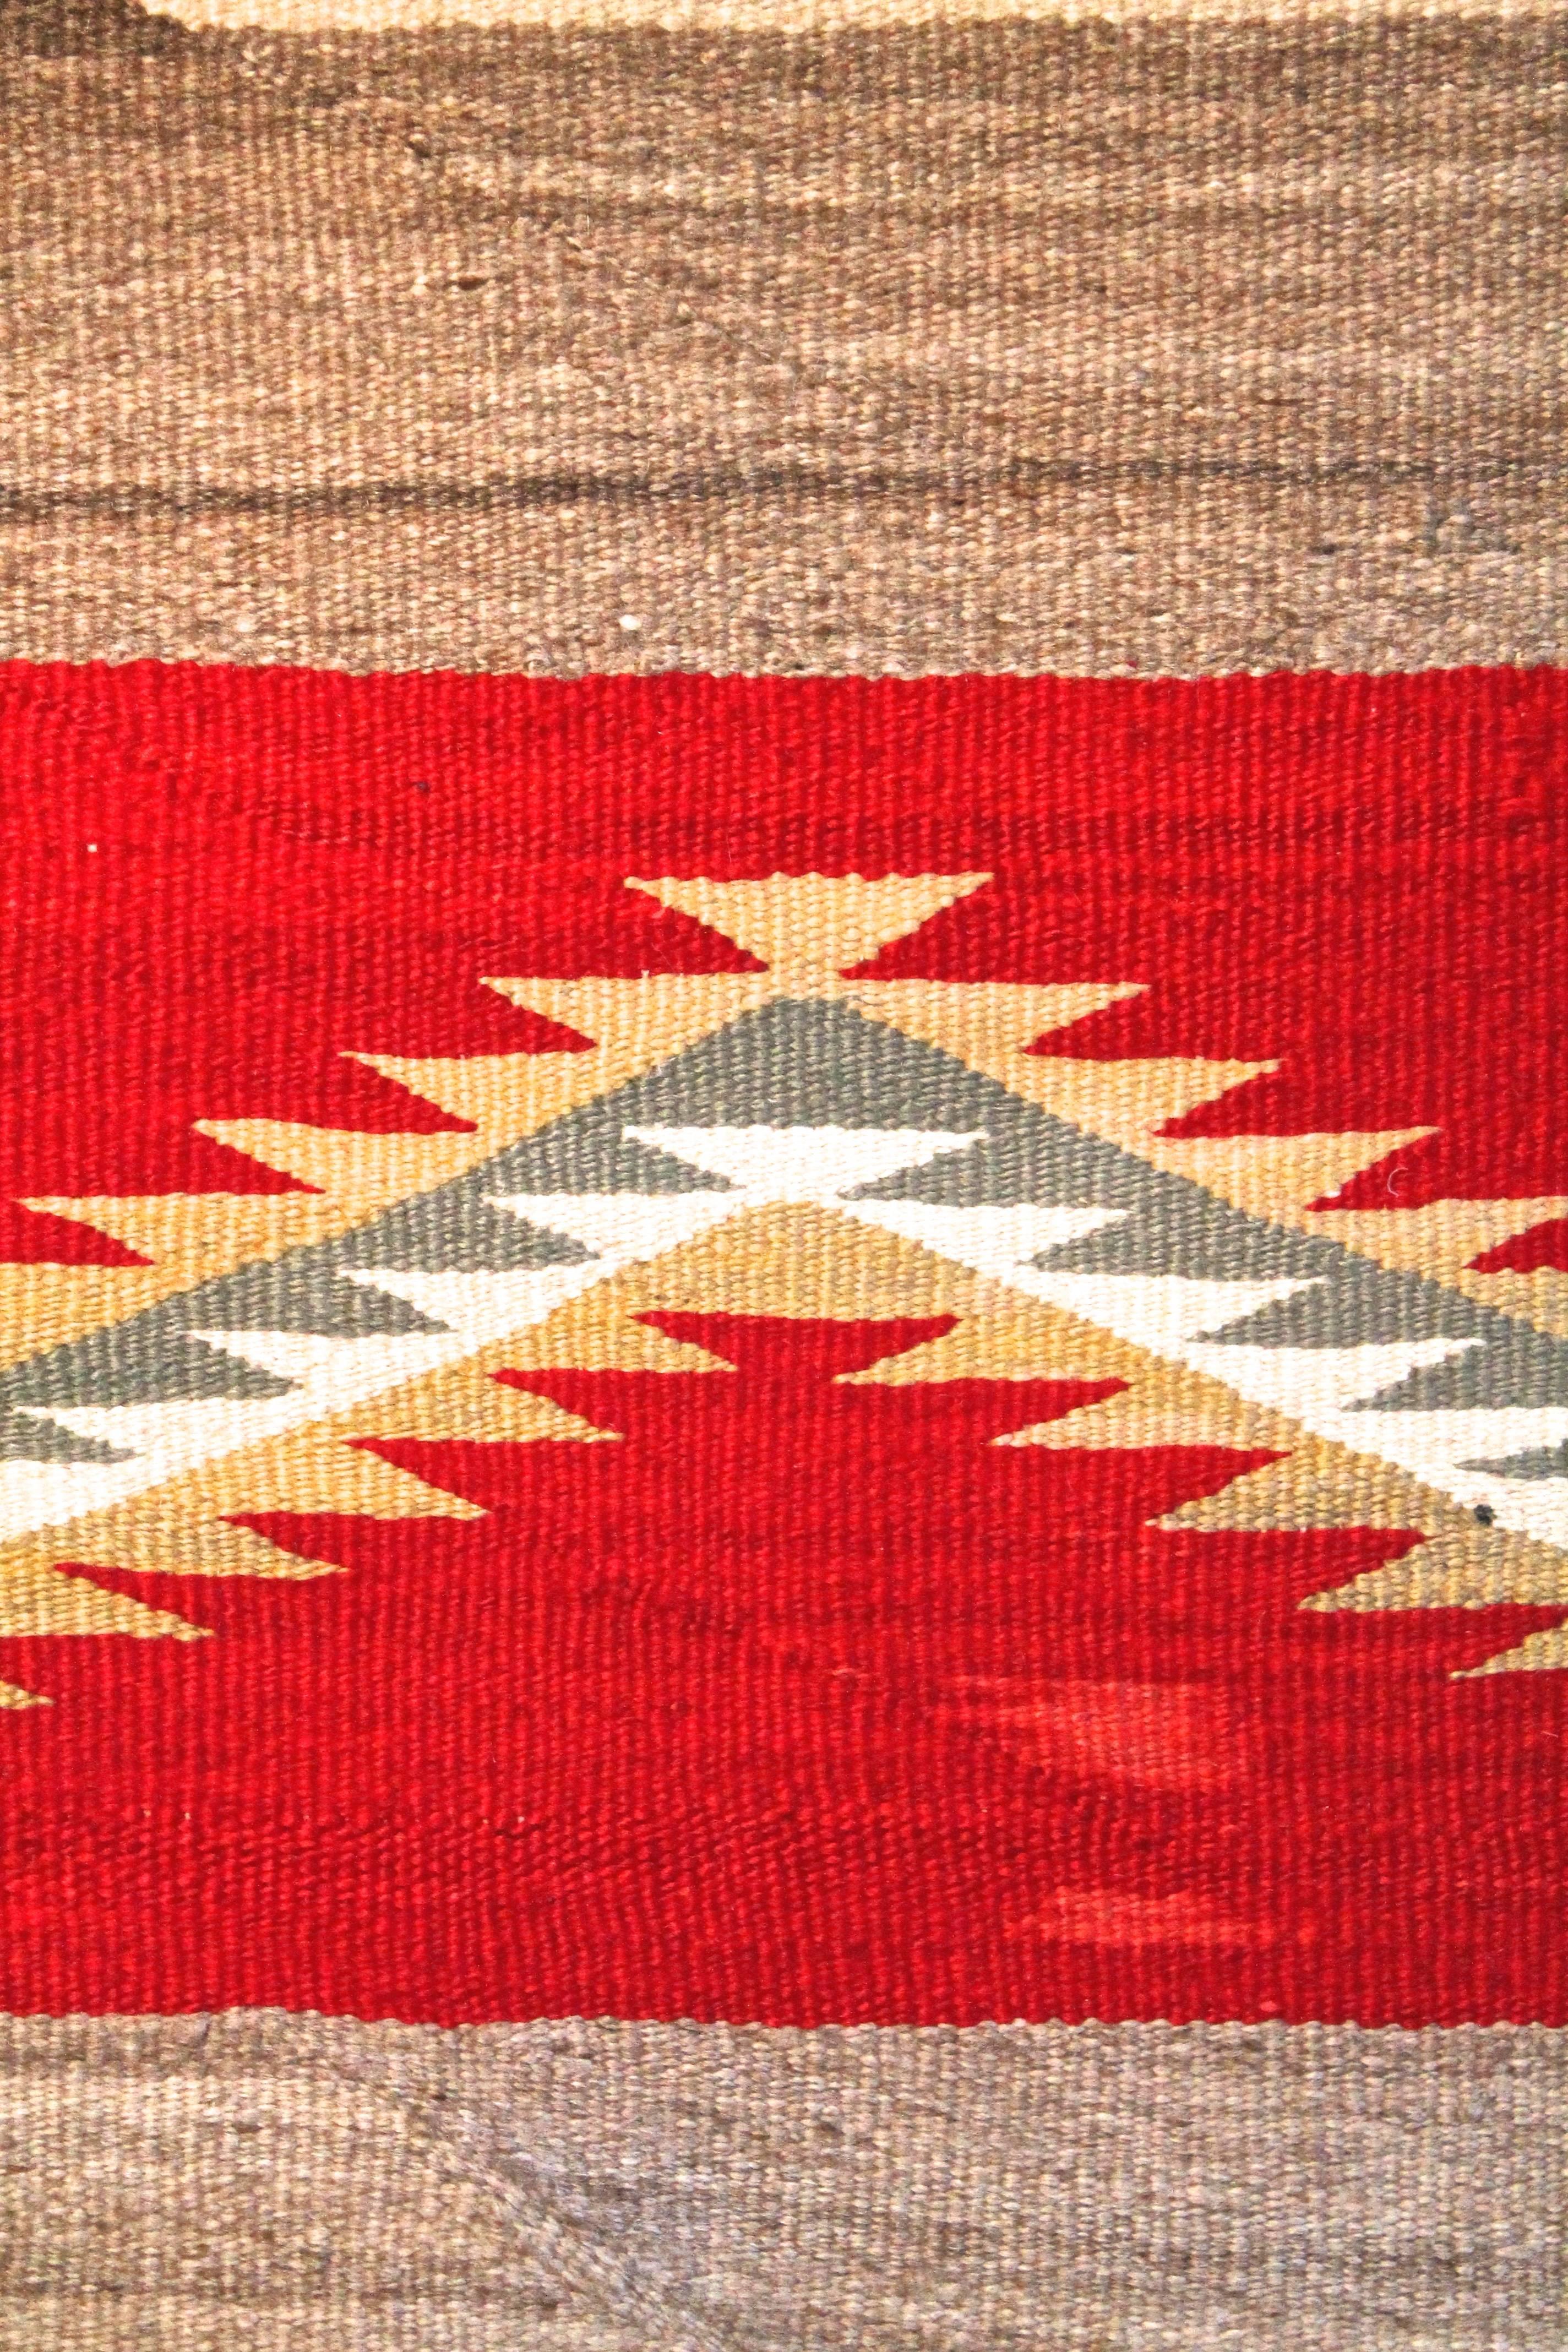 American Navajo Transitional Blanket, circa 1880-1900